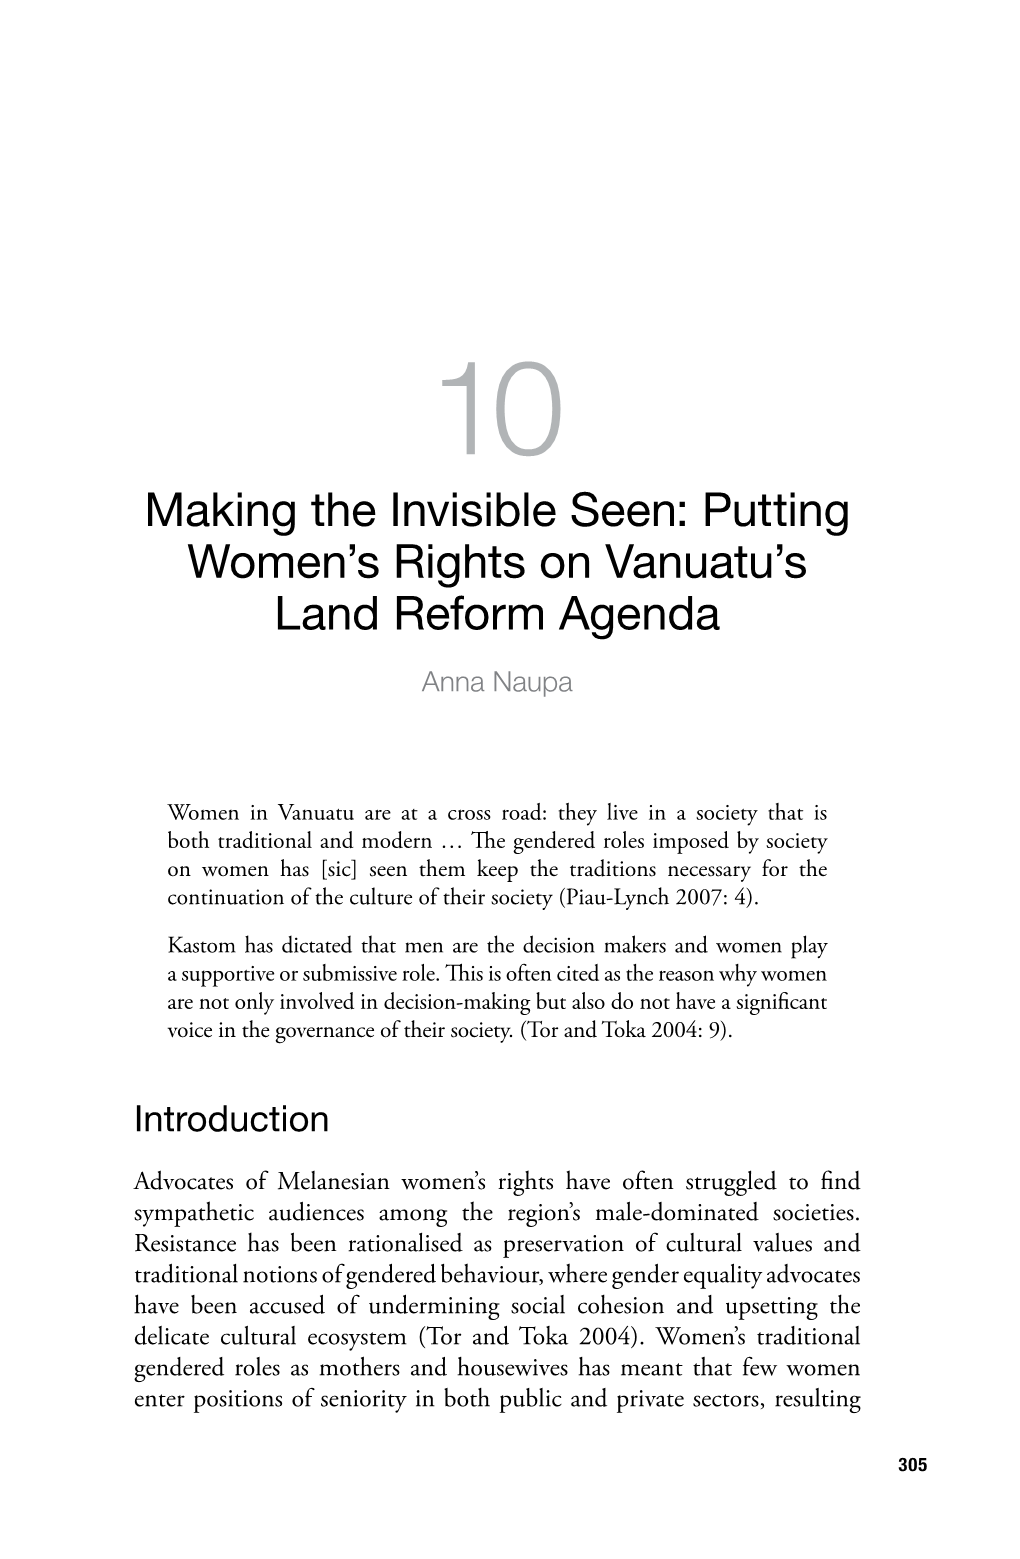 Putting Women's Rights on Vanuatu's Land Reform Agenda